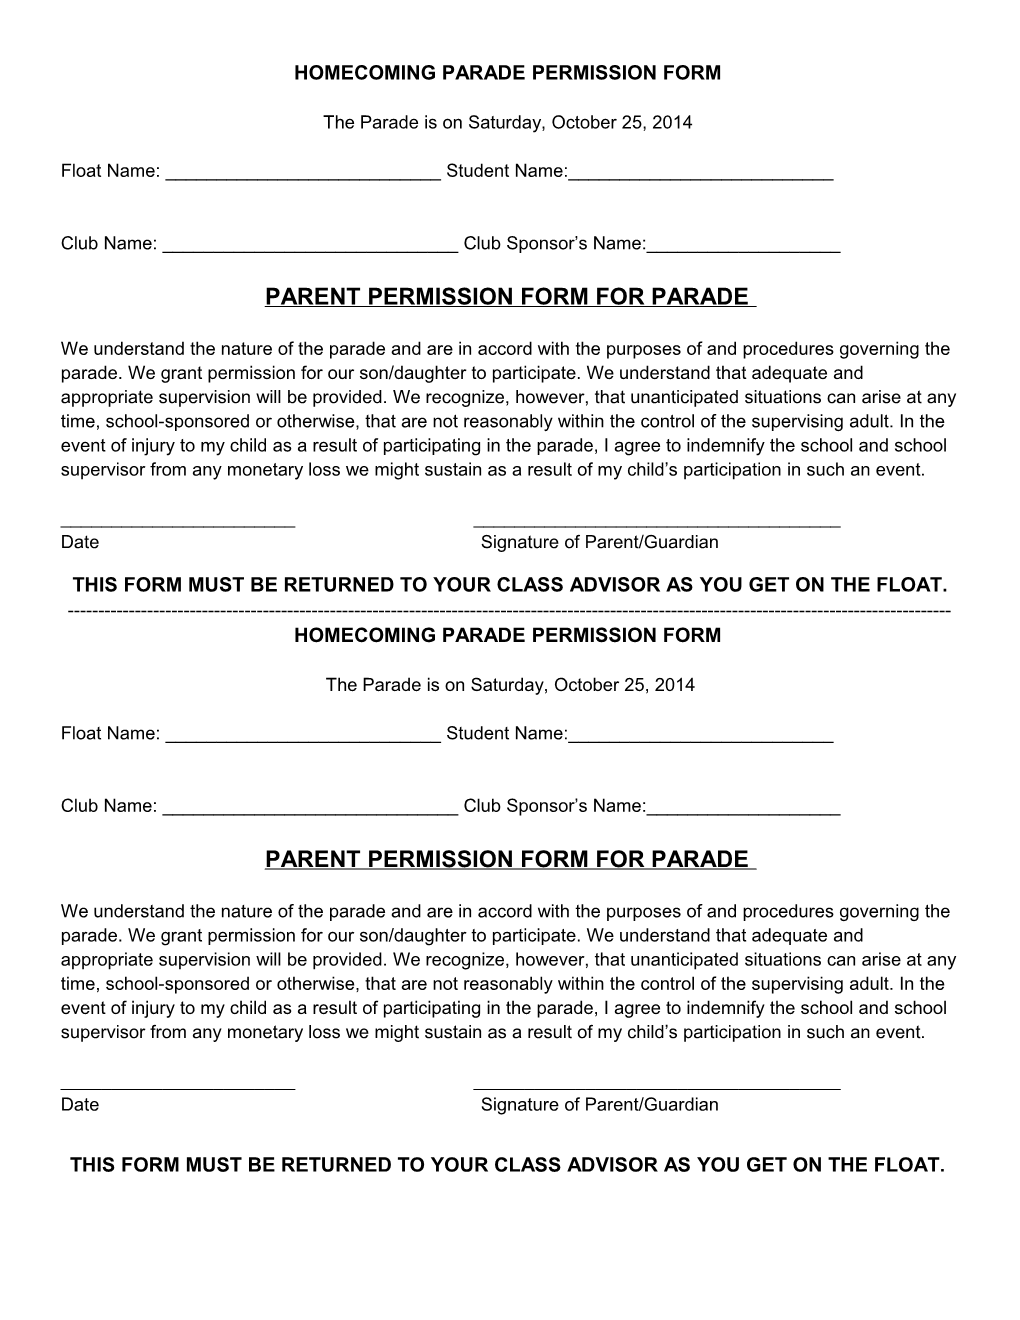 Homecoming Parade Permission Form